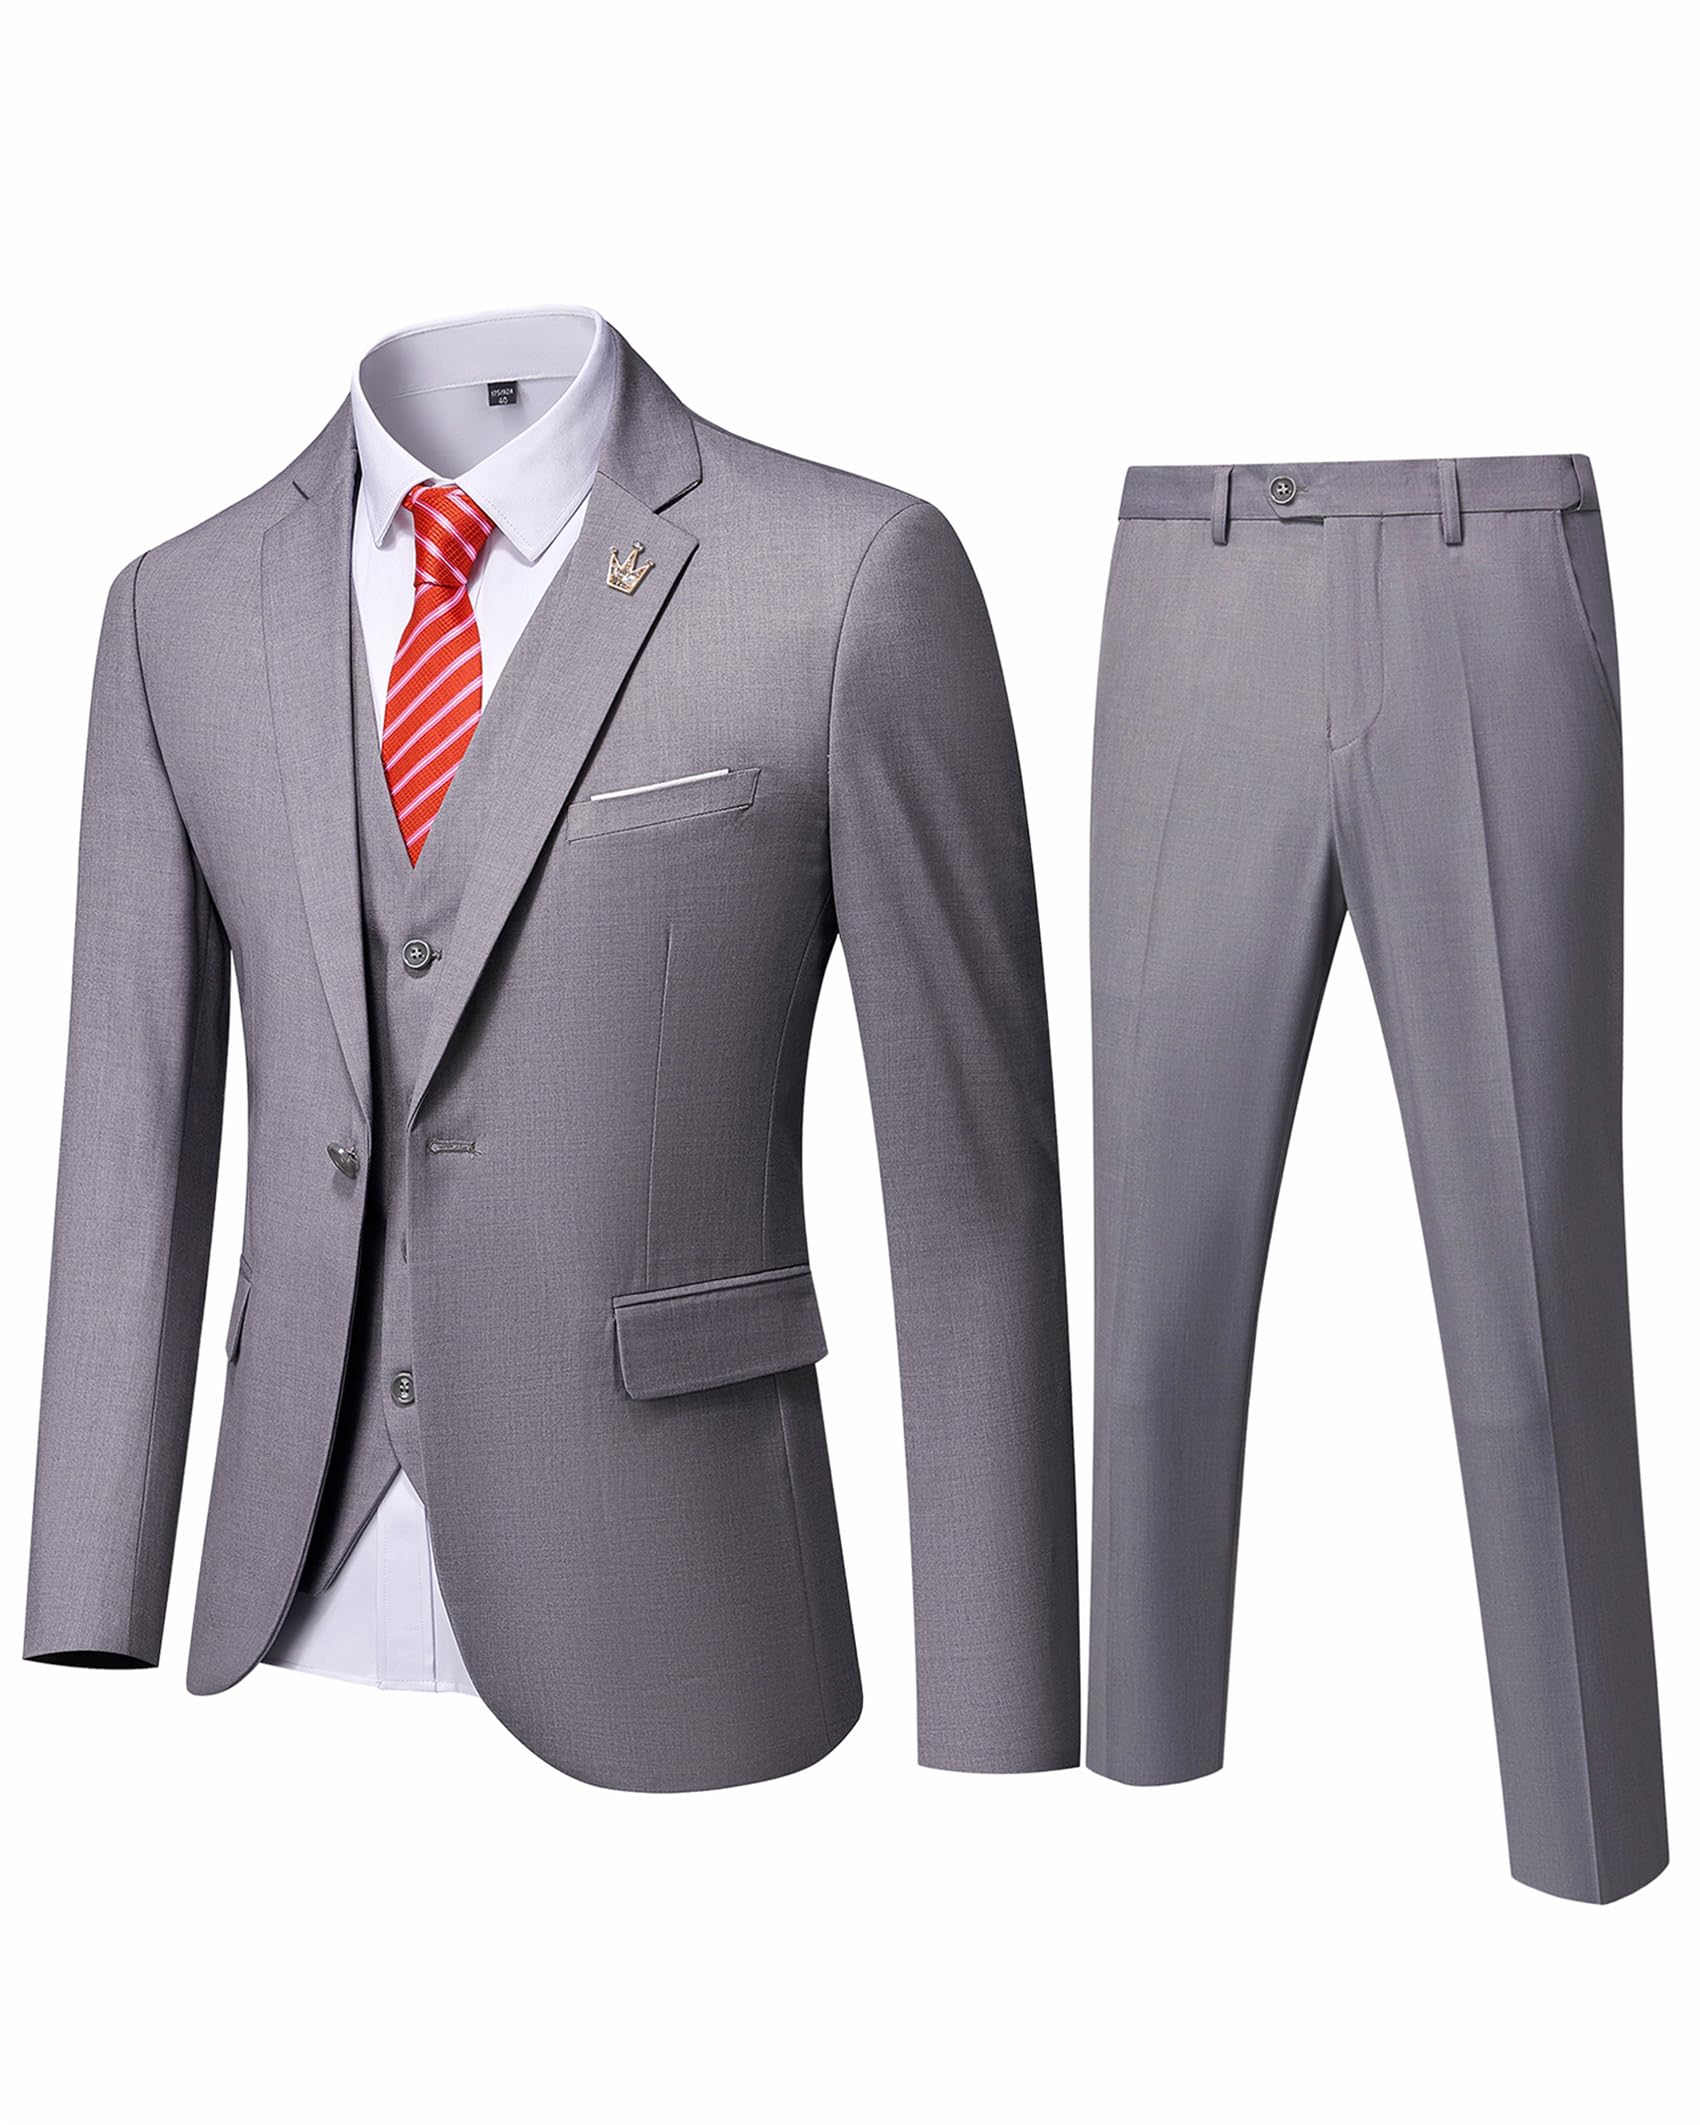 EastSide Herren Slim Fit 3-teiliger Anzug, Ein-Knopf-Blazer-Set, Jacke Weste & Hose, Hellgrau, S